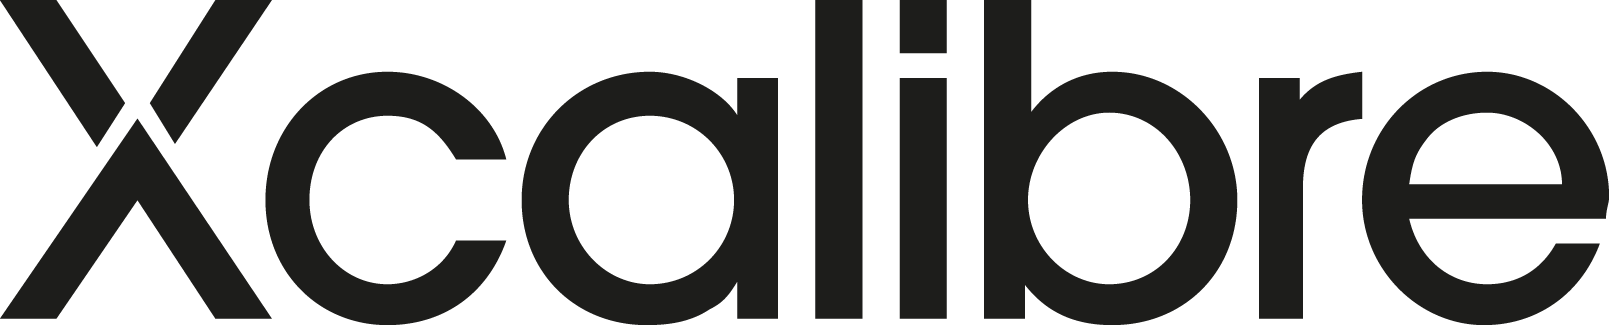 Xcalibre logo black